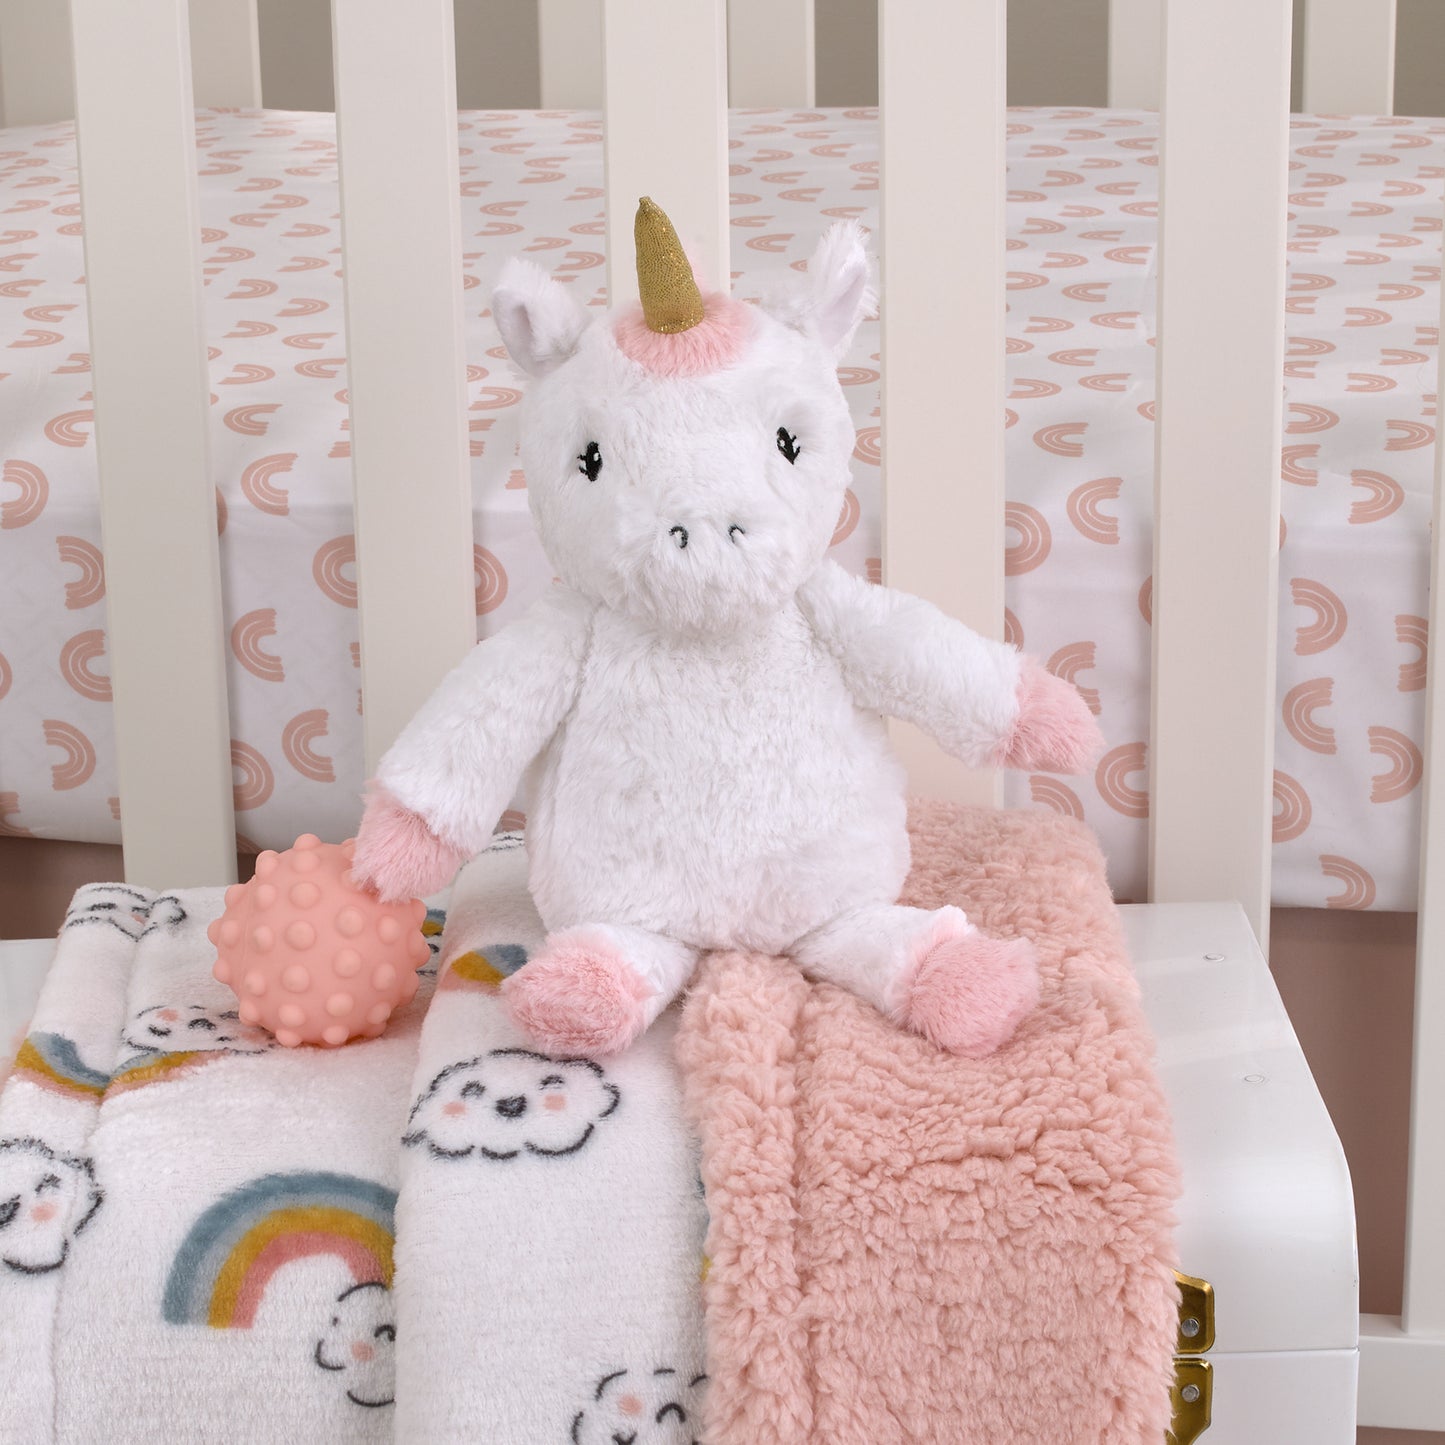 Carter's Chasing Rainbows - White, Pink and Gold Sparkle Unicorn Super Soft Plush Stuffed Animal